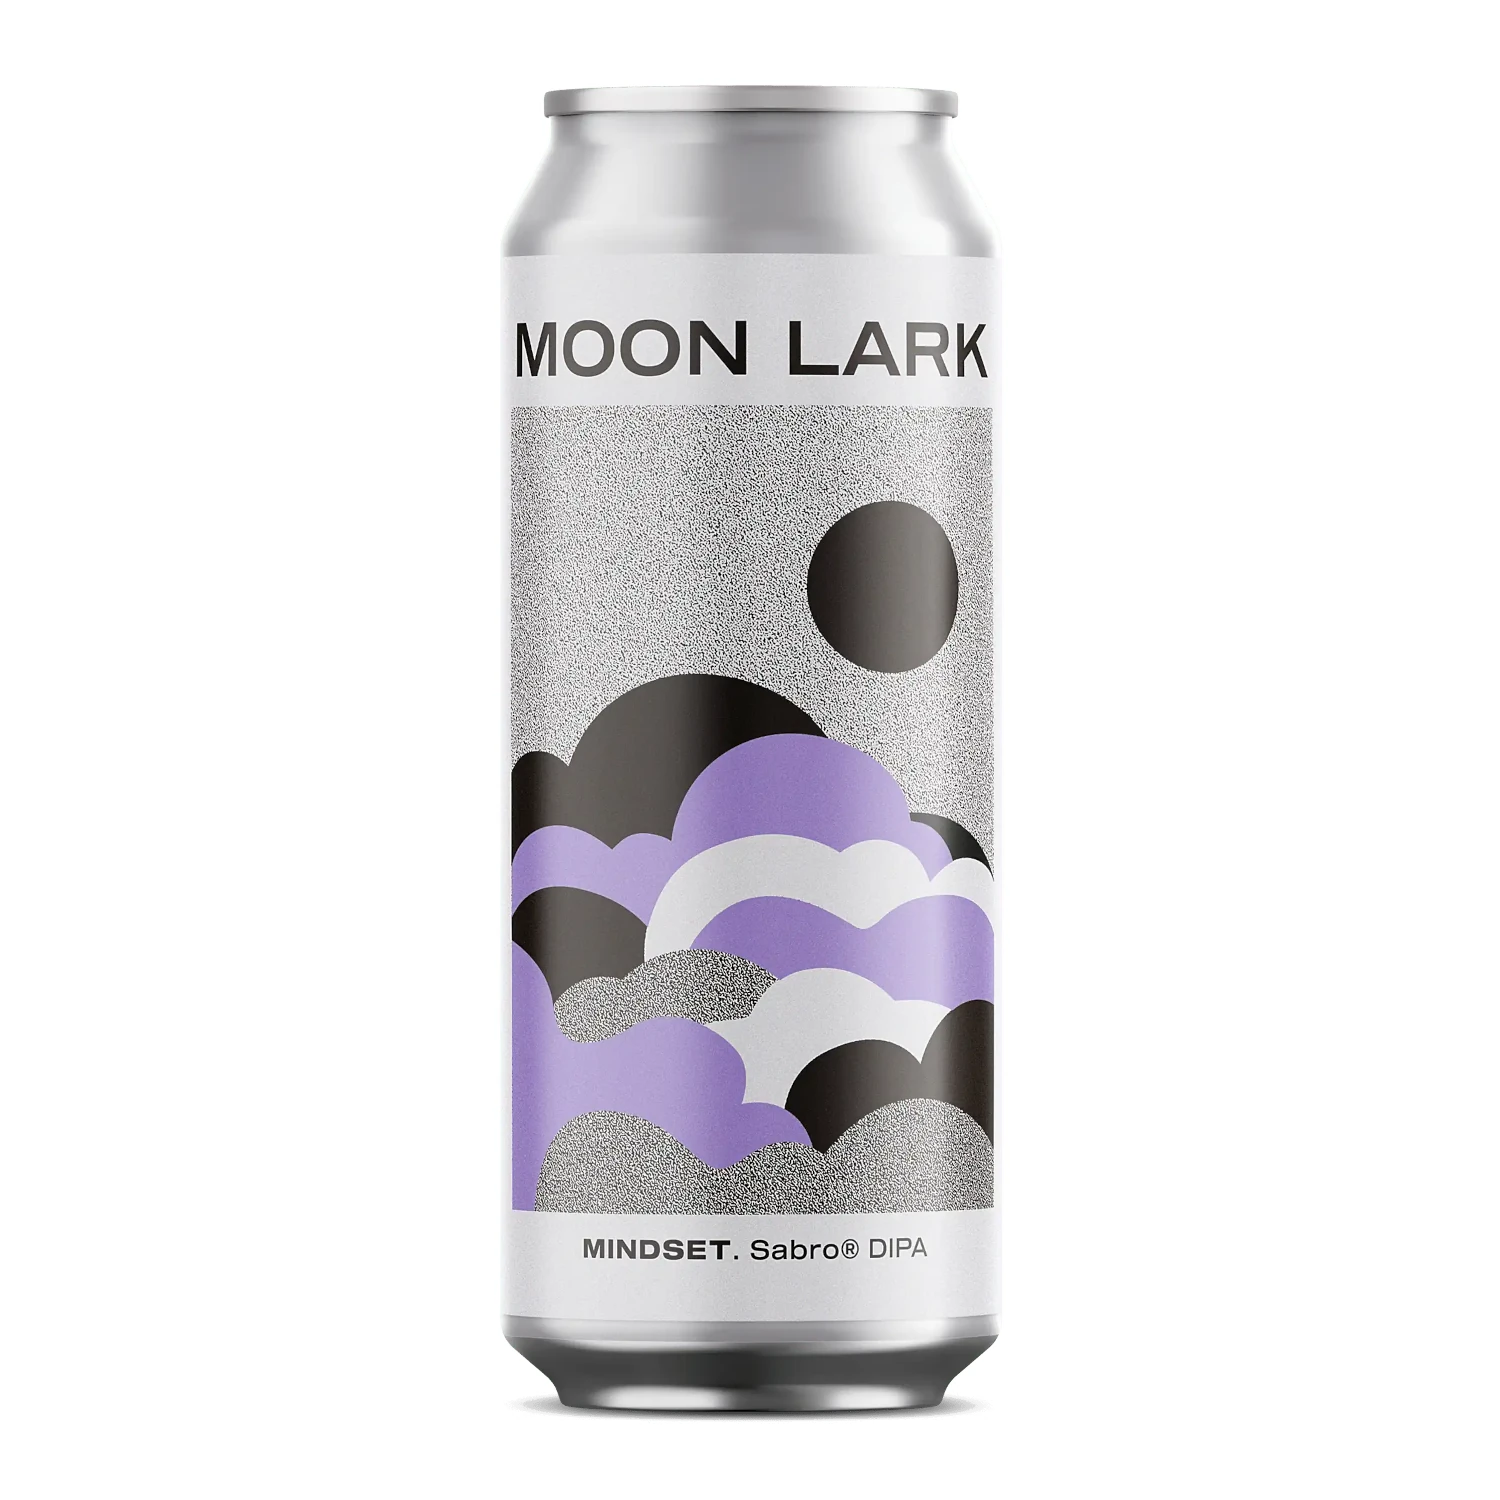 Moon Lark MINDSET – Single Hop Sabro DIPA